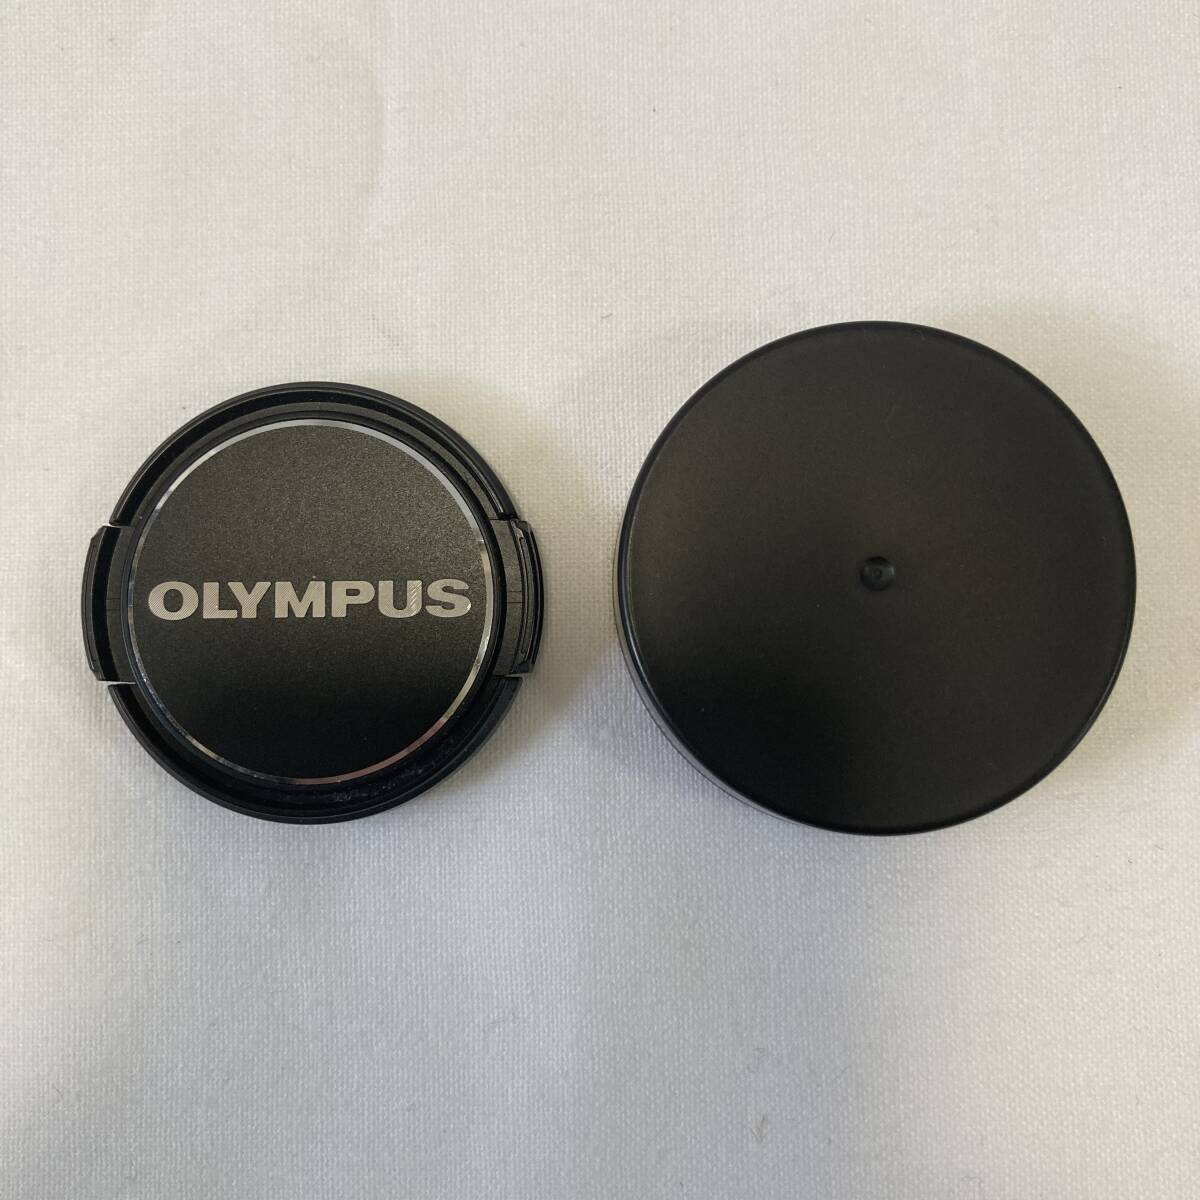 [1 jpy start ]Olympus Olympus M.ZUIKO Digital ED 14-42mm f3.5-5.6 EZ